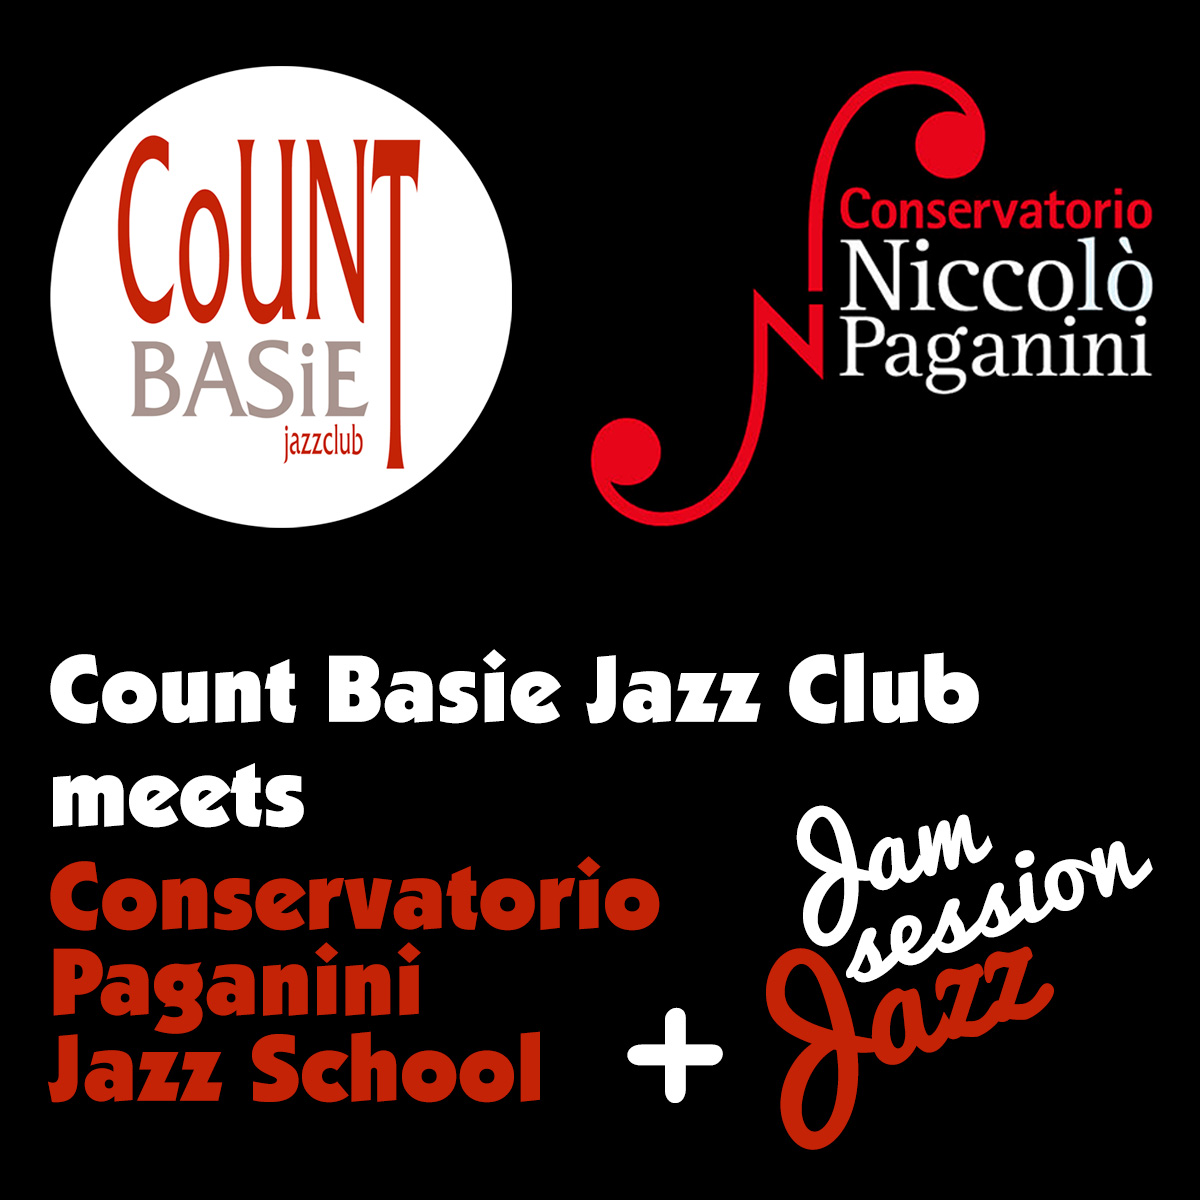 Count Basie Jazz Club meets Conservatorio Paganini Jazz School